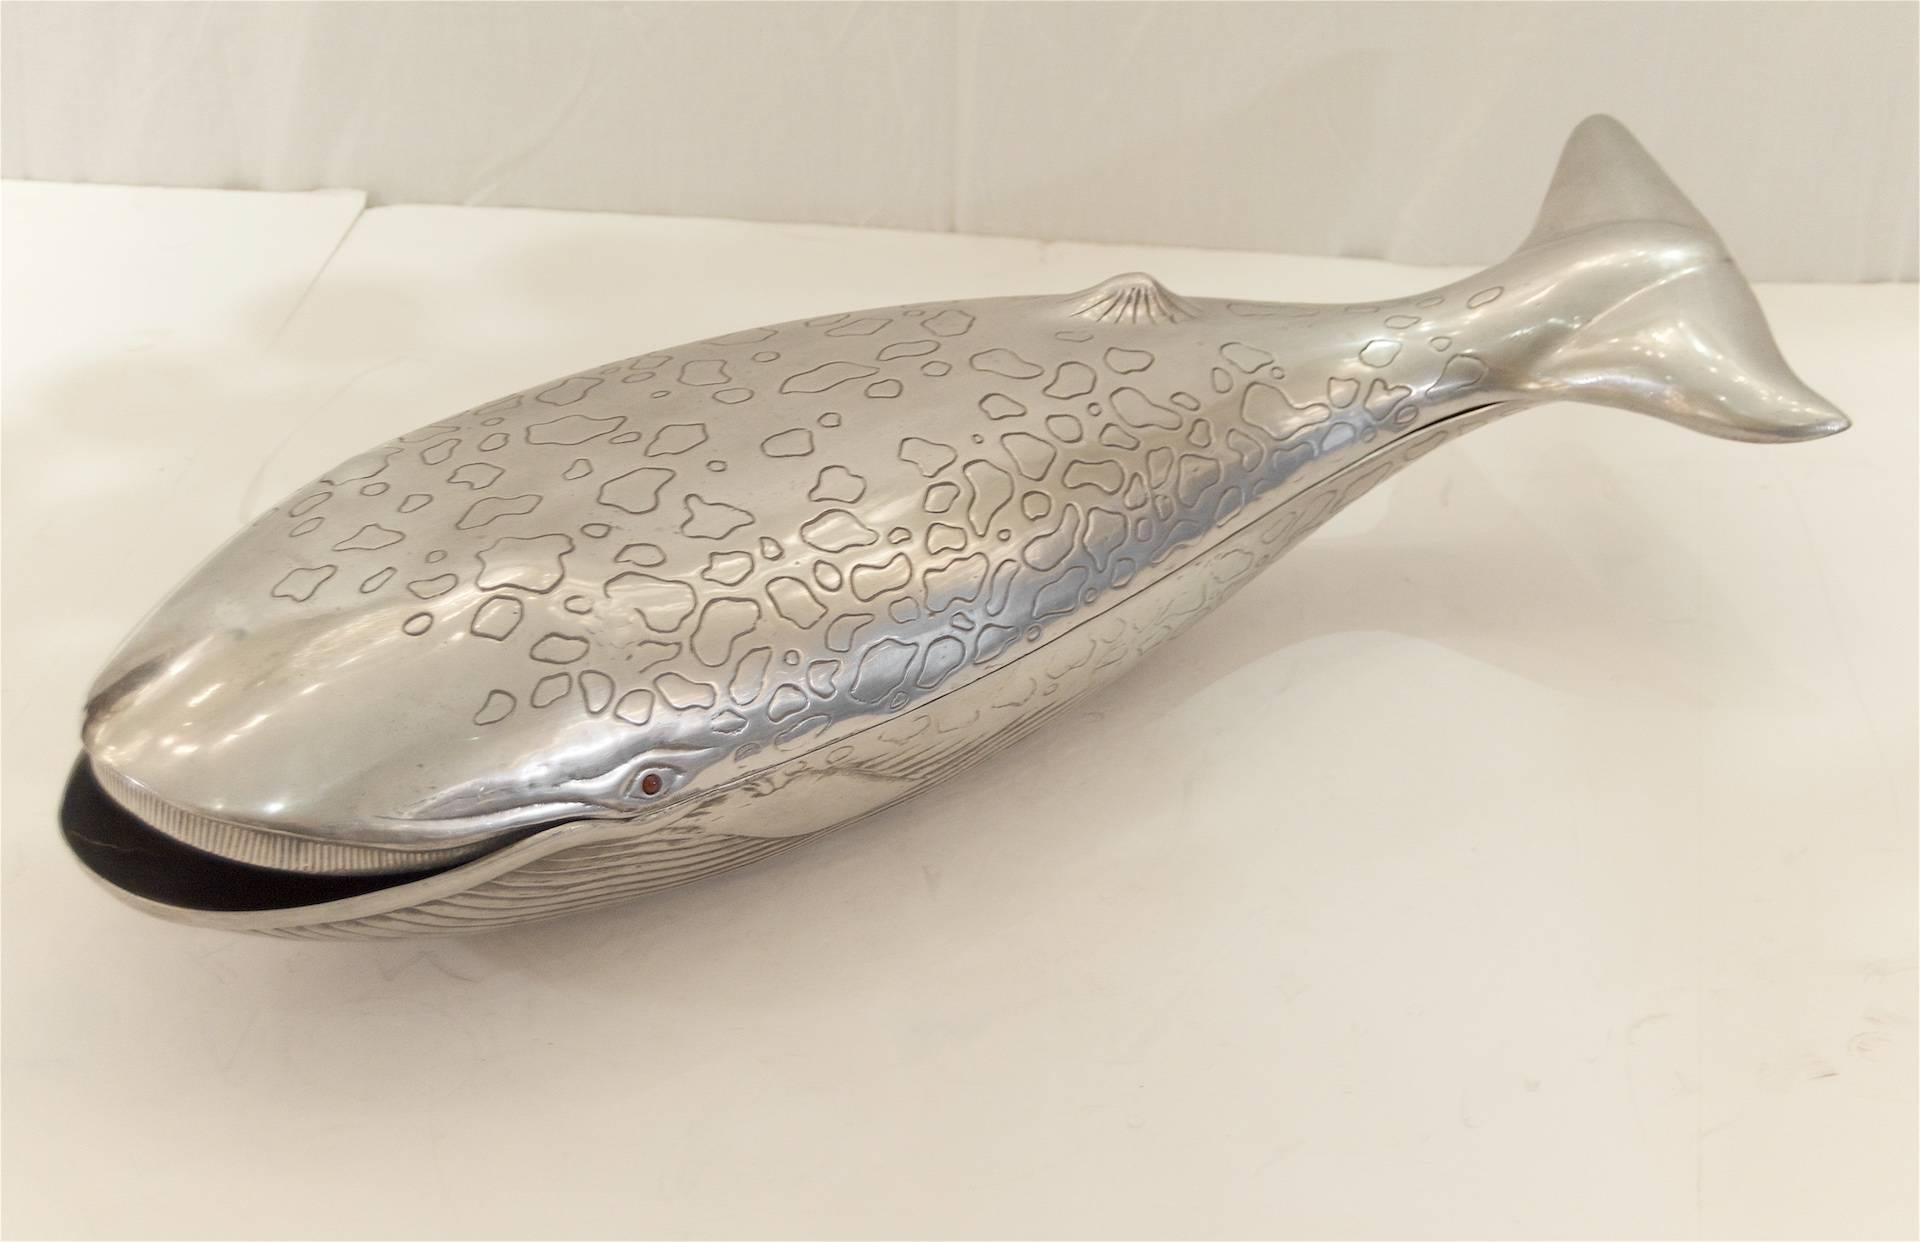 Decorative Whale Bowl or Centrepiece 1